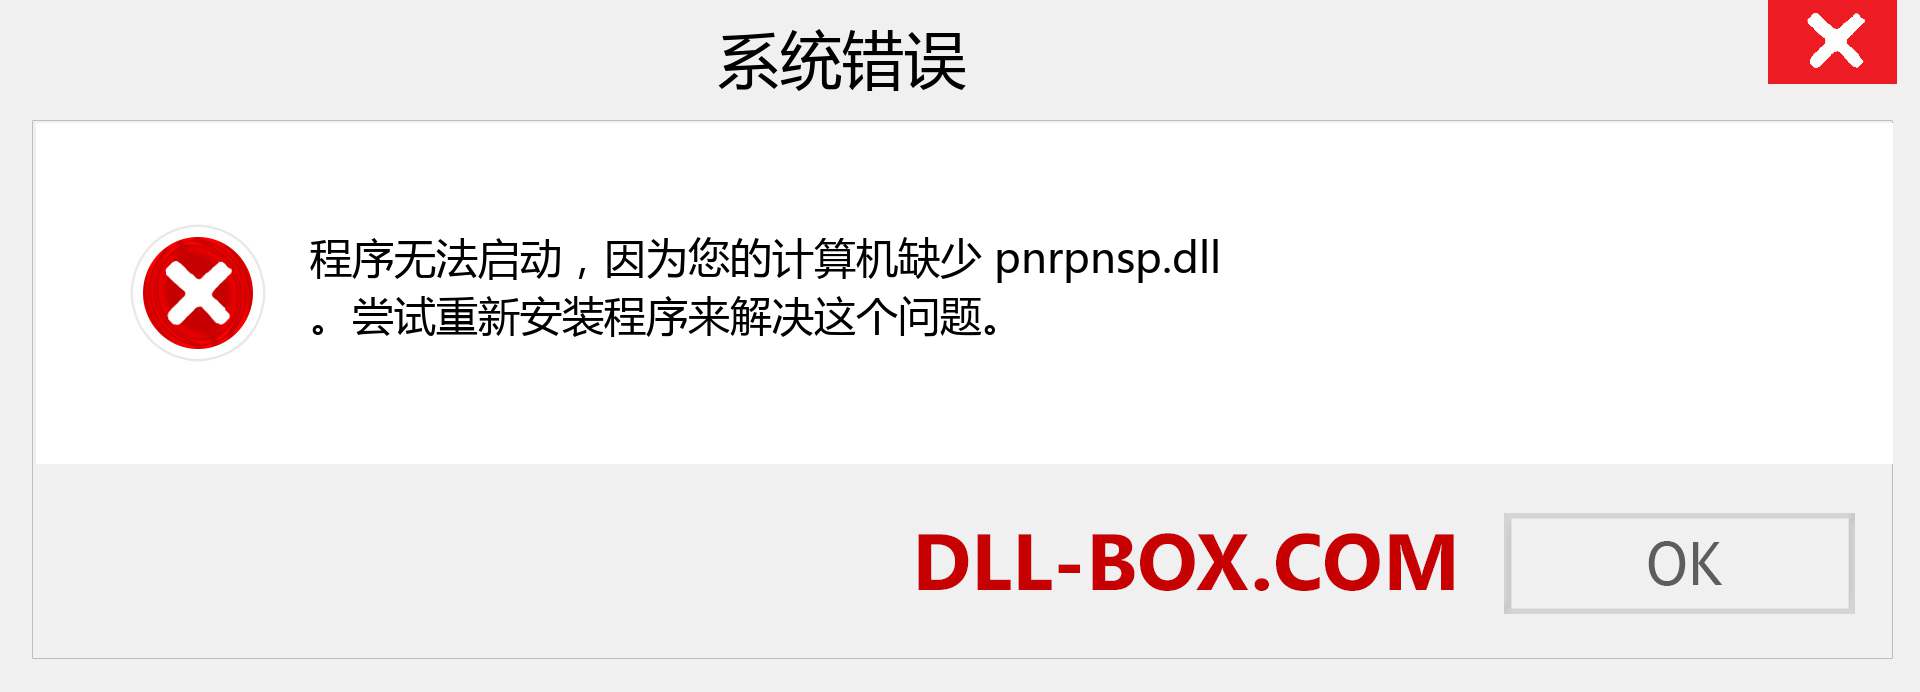 pnrpnsp.dll 文件丢失？。 适用于 Windows 7、8、10 的下载 - 修复 Windows、照片、图像上的 pnrpnsp dll 丢失错误